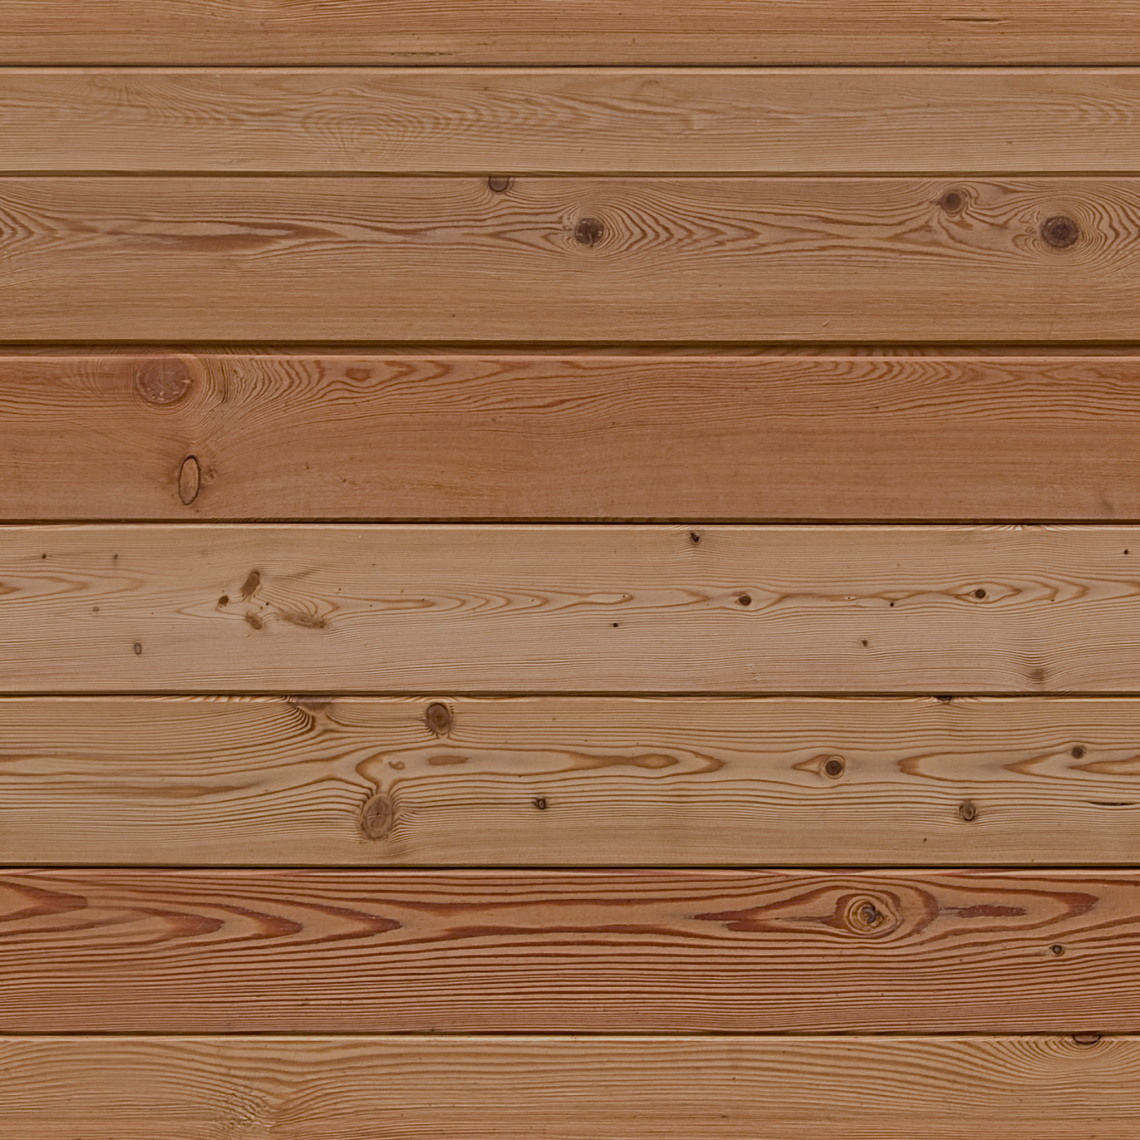 Planks-Wooden-05-Albedo